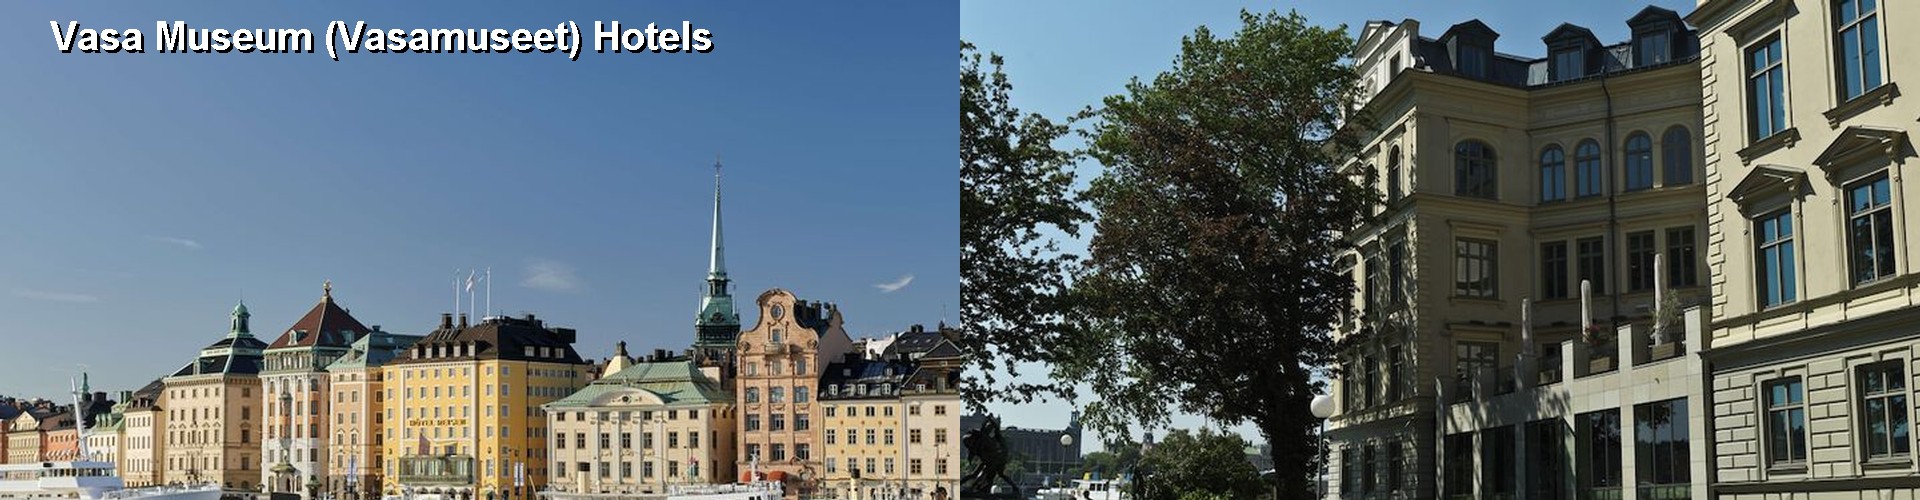 5 Best Hotels near Vasa Museum (Vasamuseet)